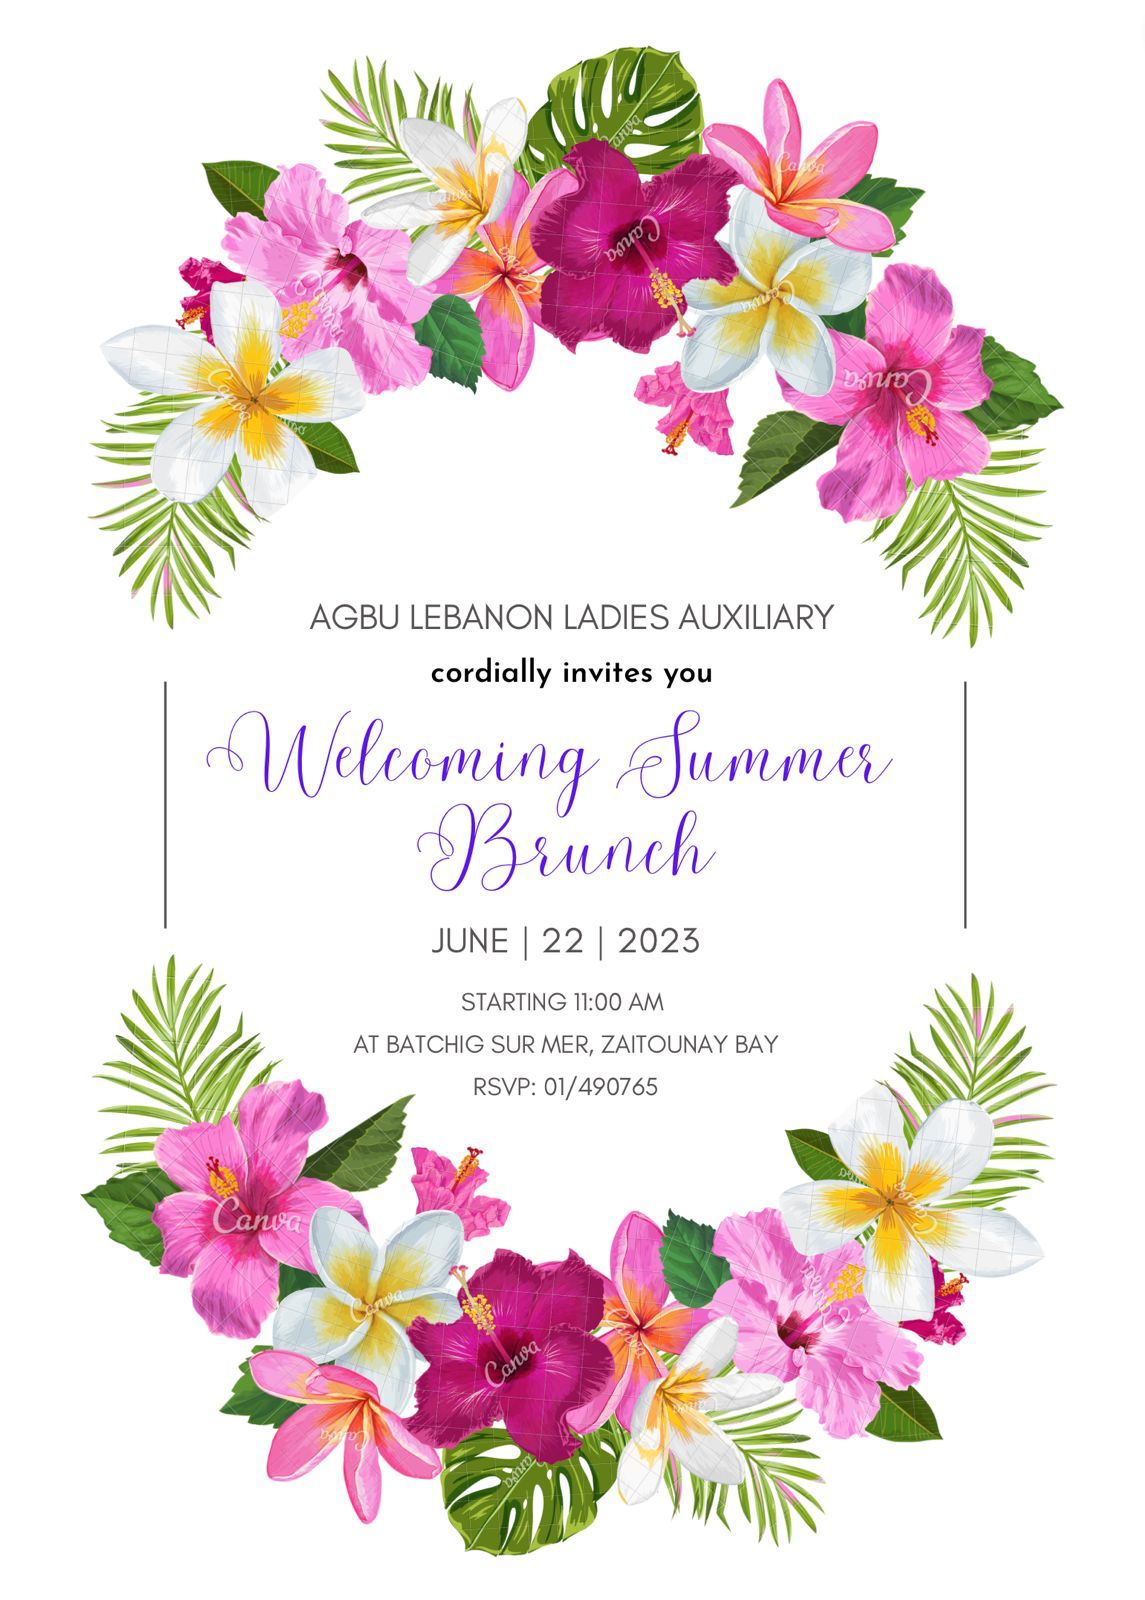 Welcoming Summer Brunch - AGBU Lebanon Ladies Auxiliary